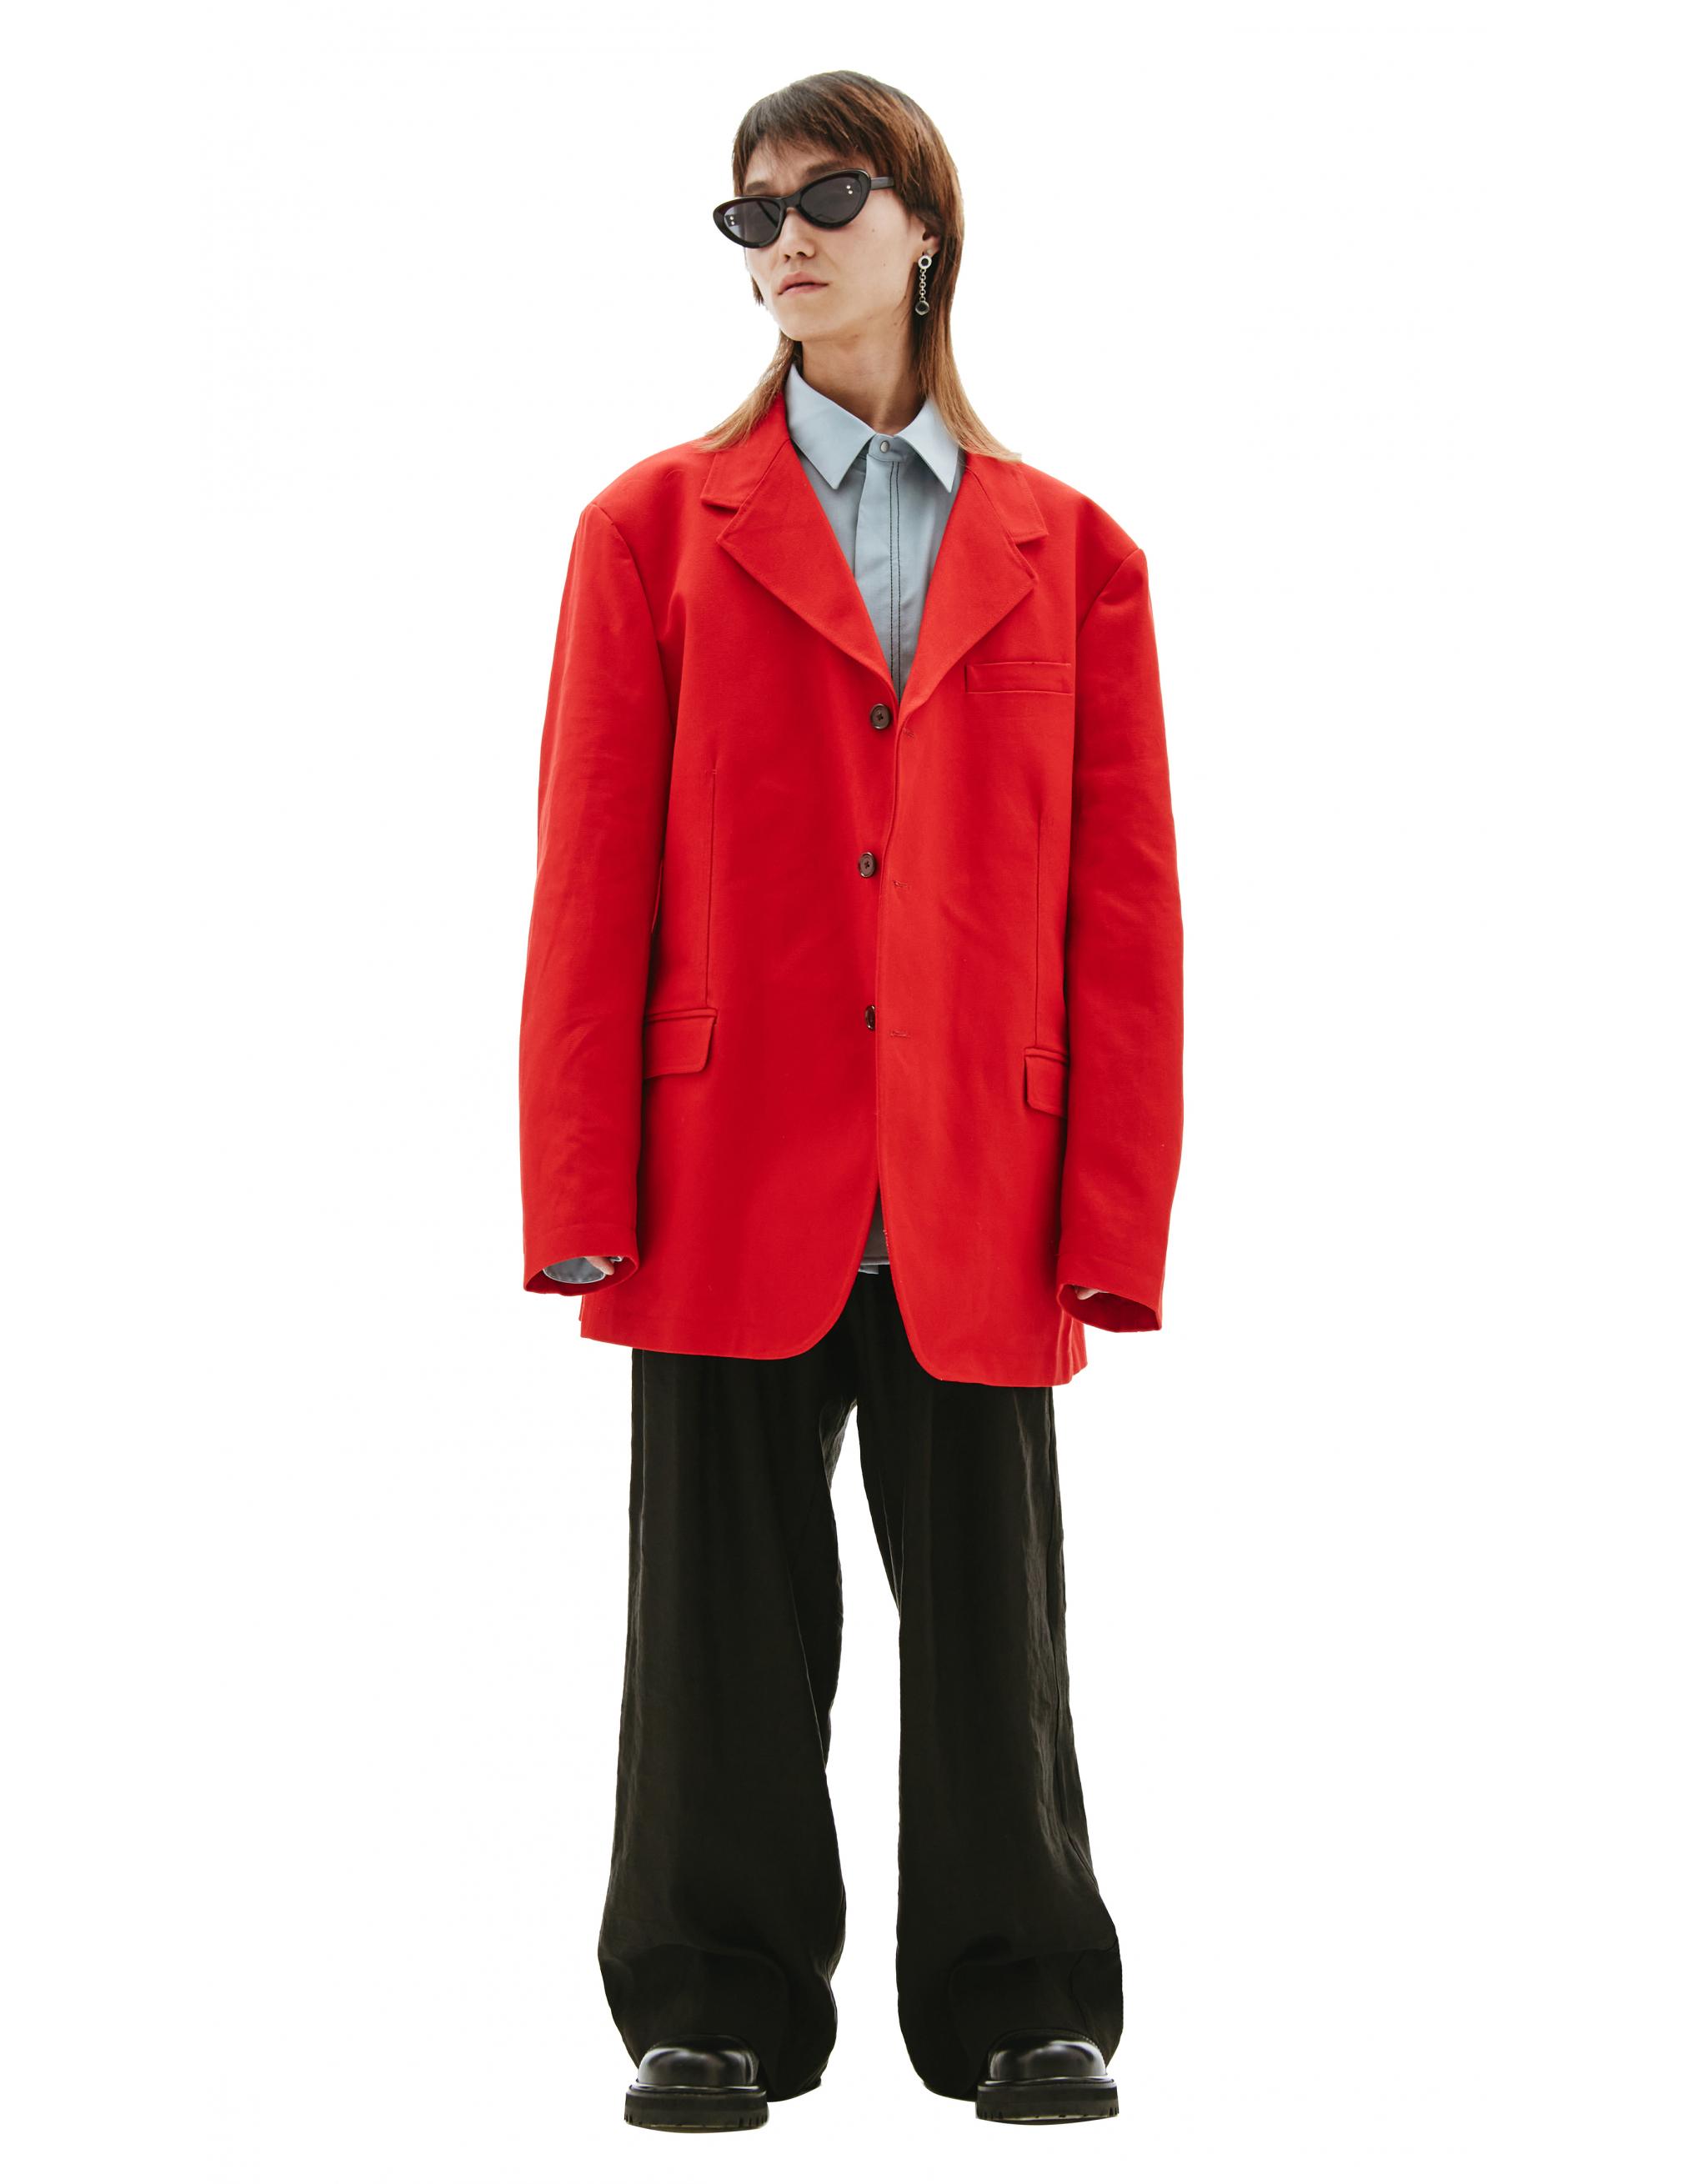 Raf Simons Red Oversize Jacket for Men - Lyst